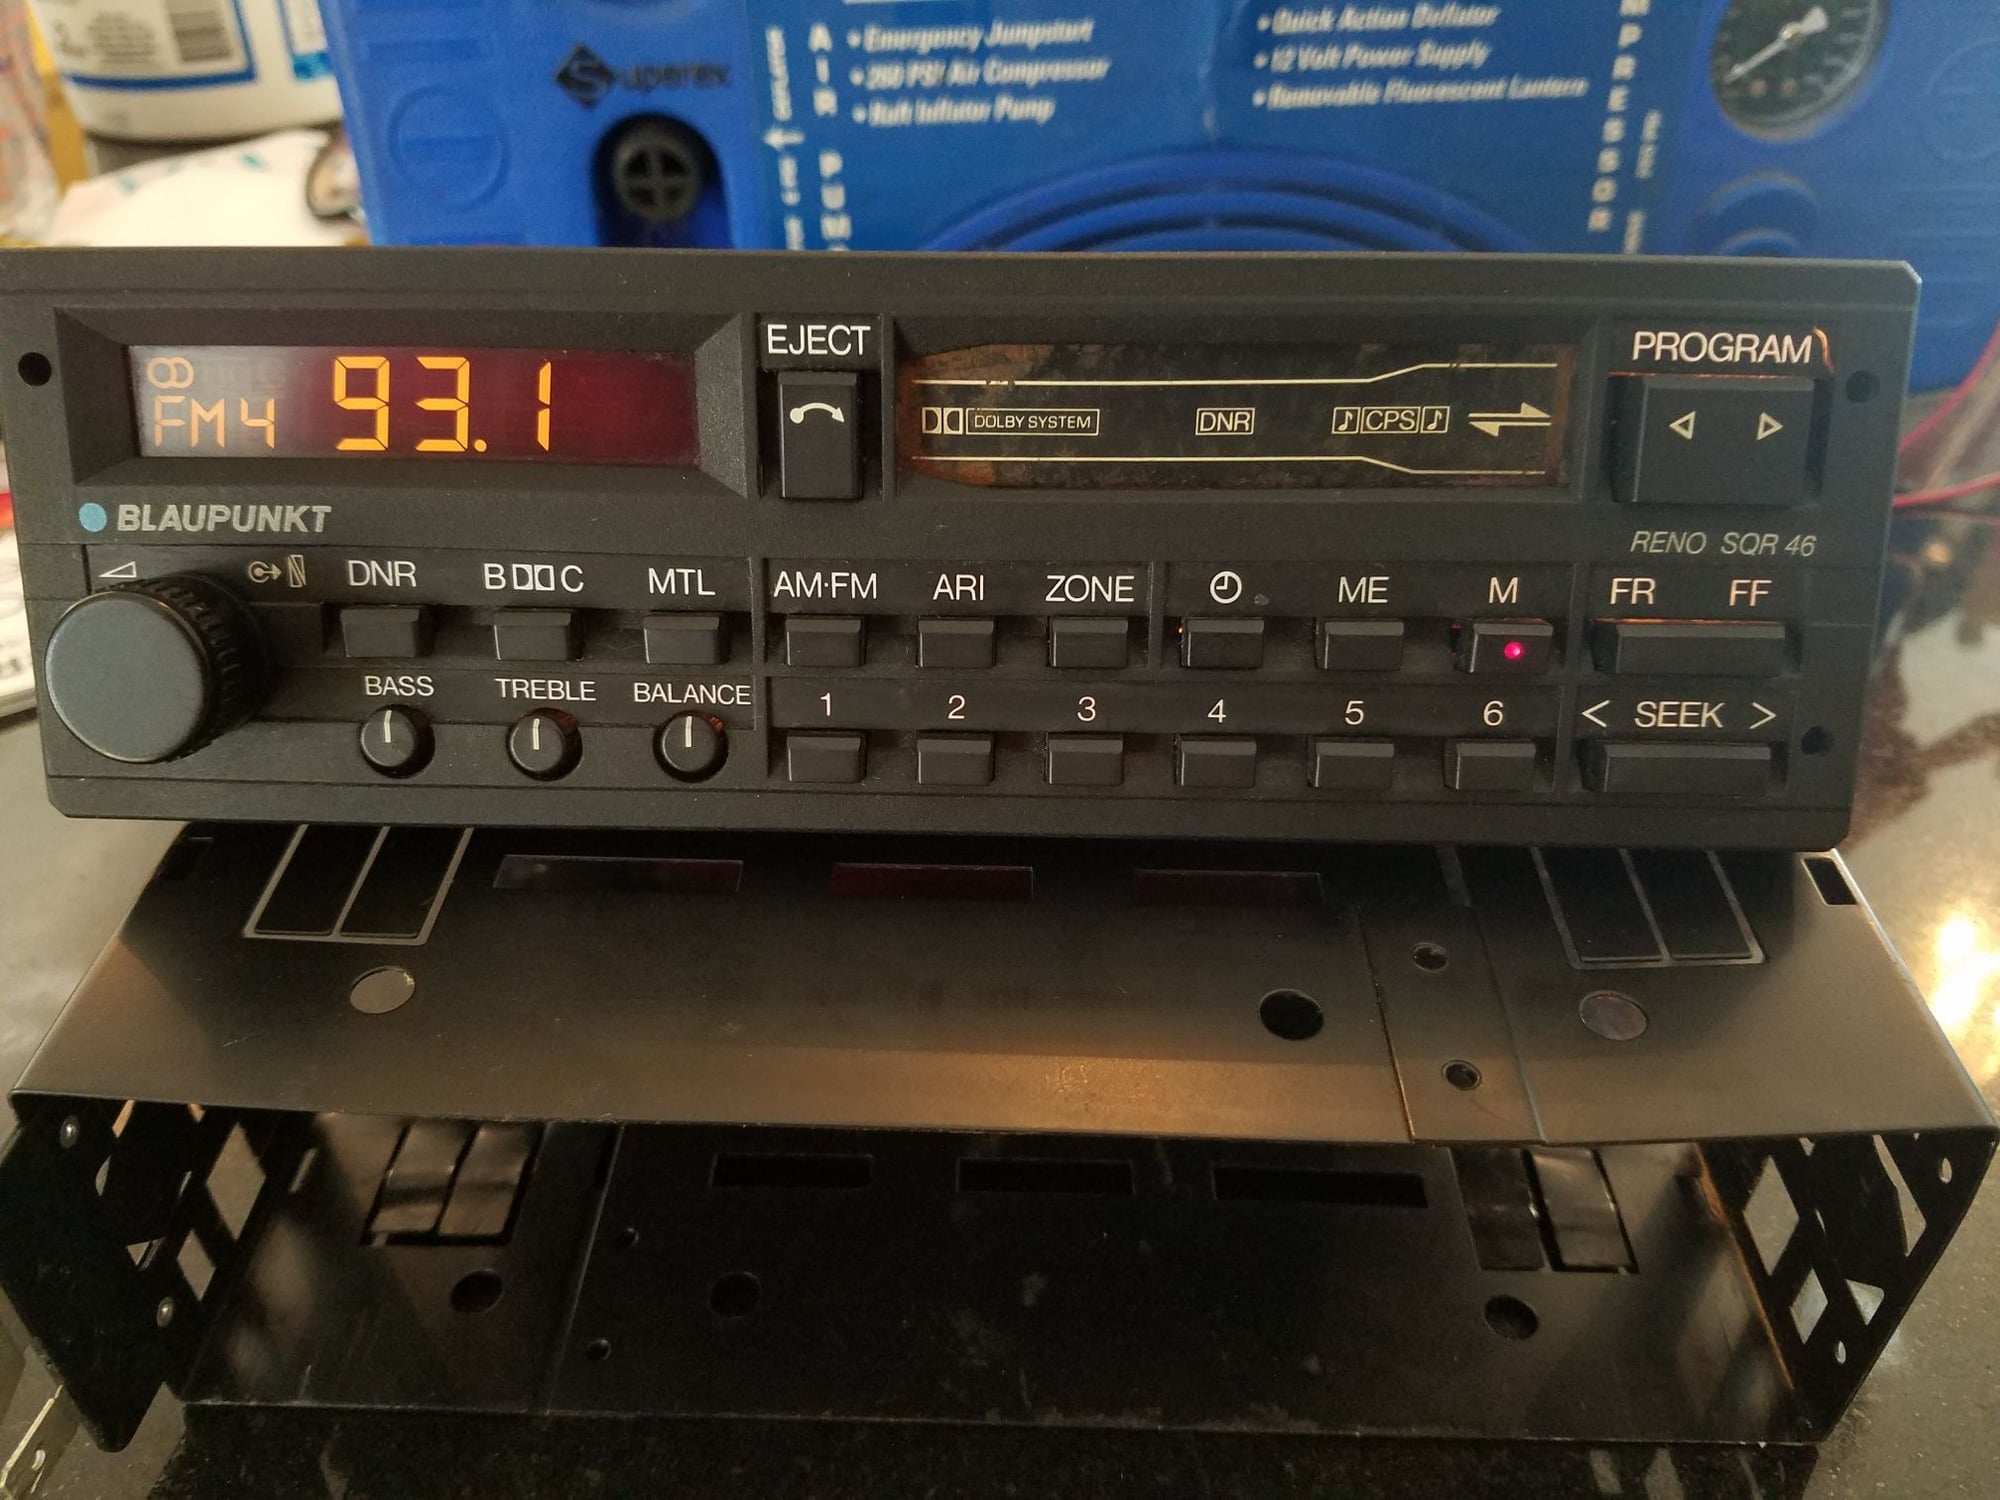 Audio Video/Electronics - Blaupunkt Reno - Used - 1983 to 1989 Porsche 911 - Portland, ME 04101, United States